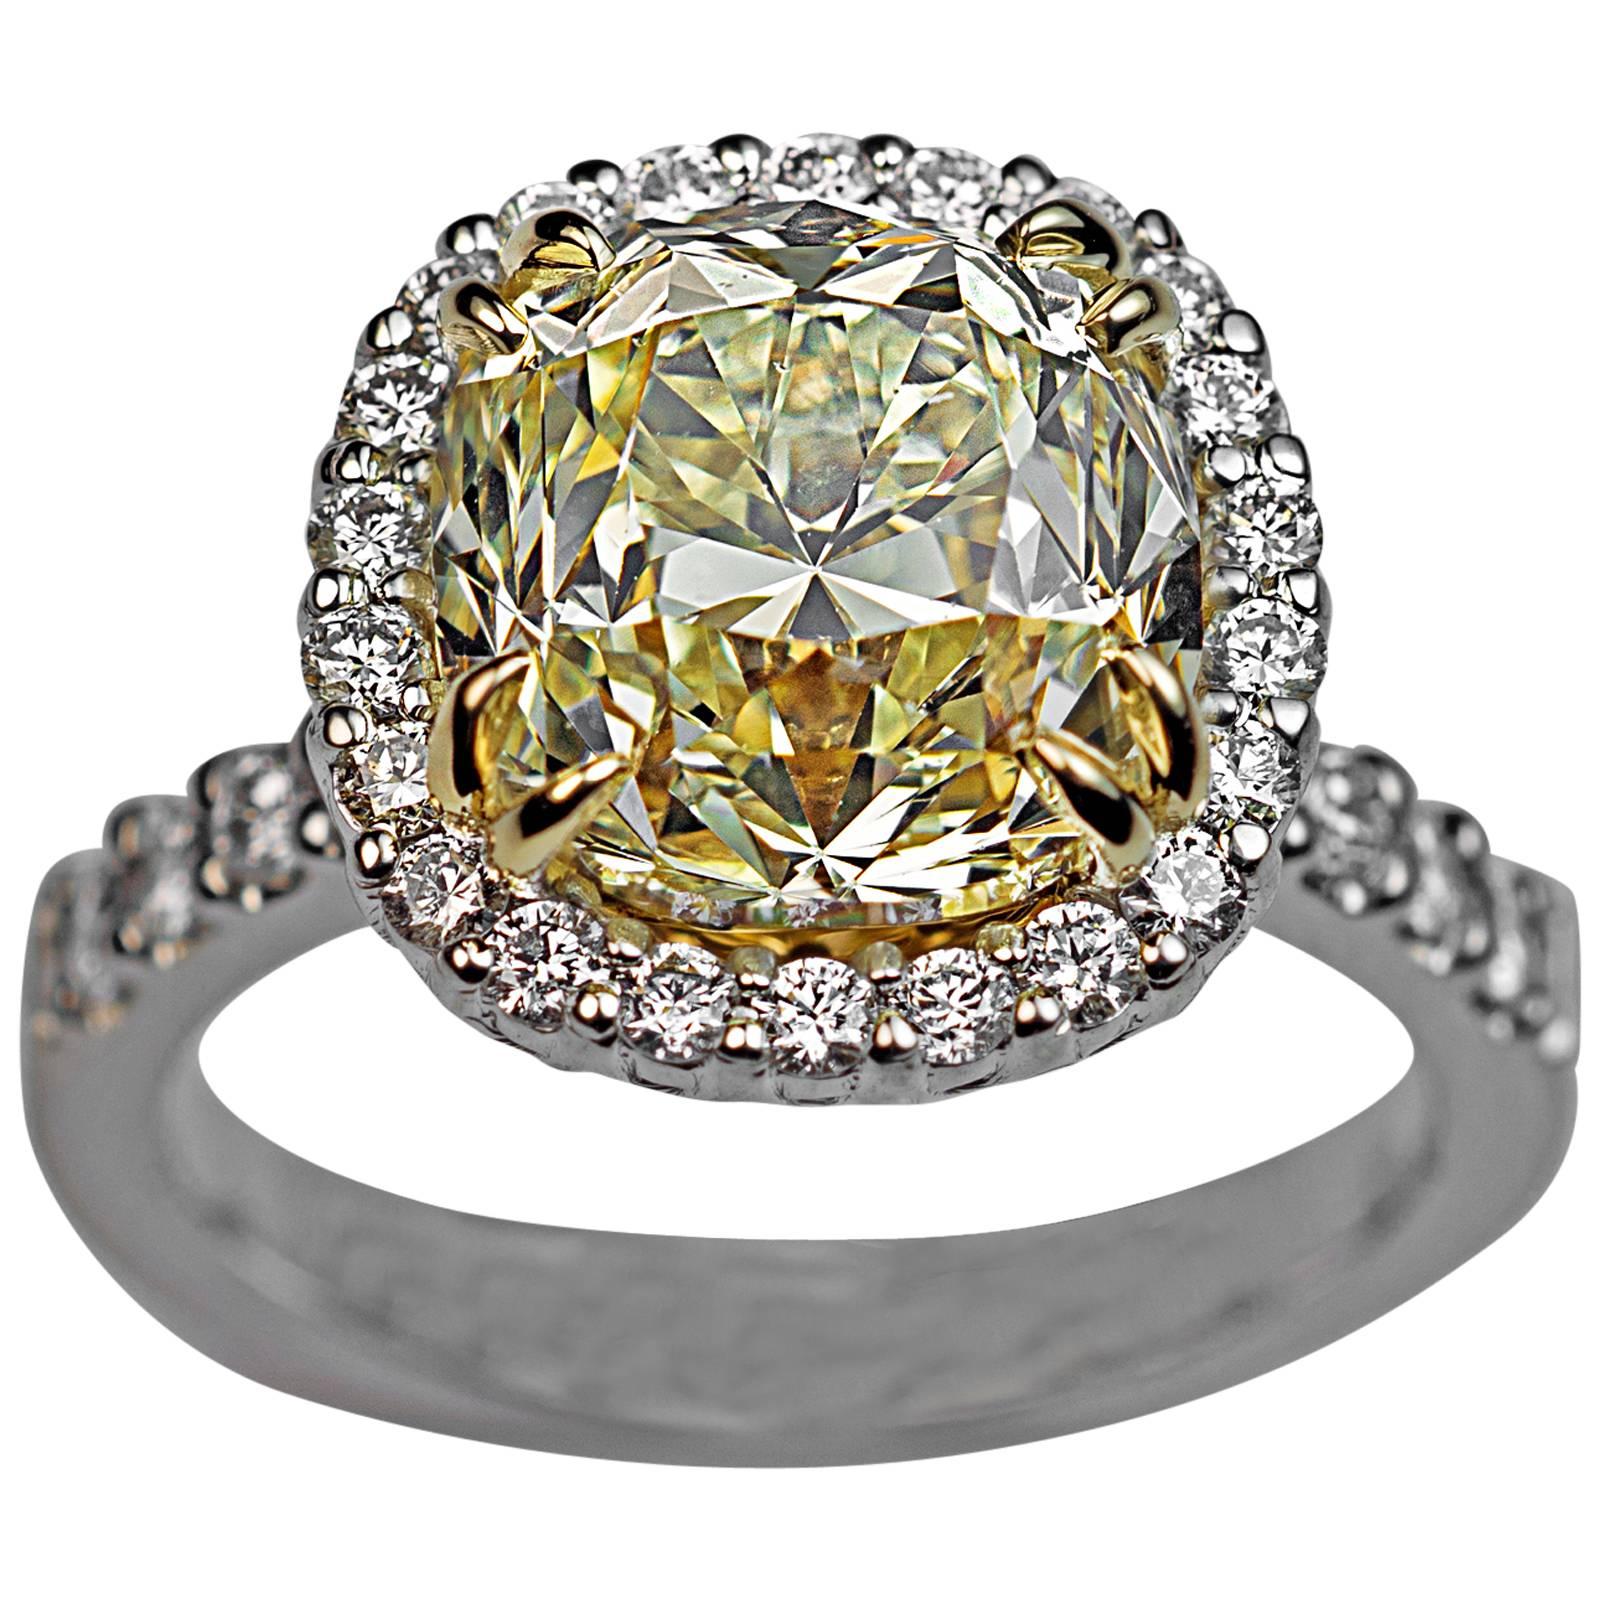 5.37 Carat GIA Fancy Light Yellow Cushion Cut Diamond Engagement Ring For Sale